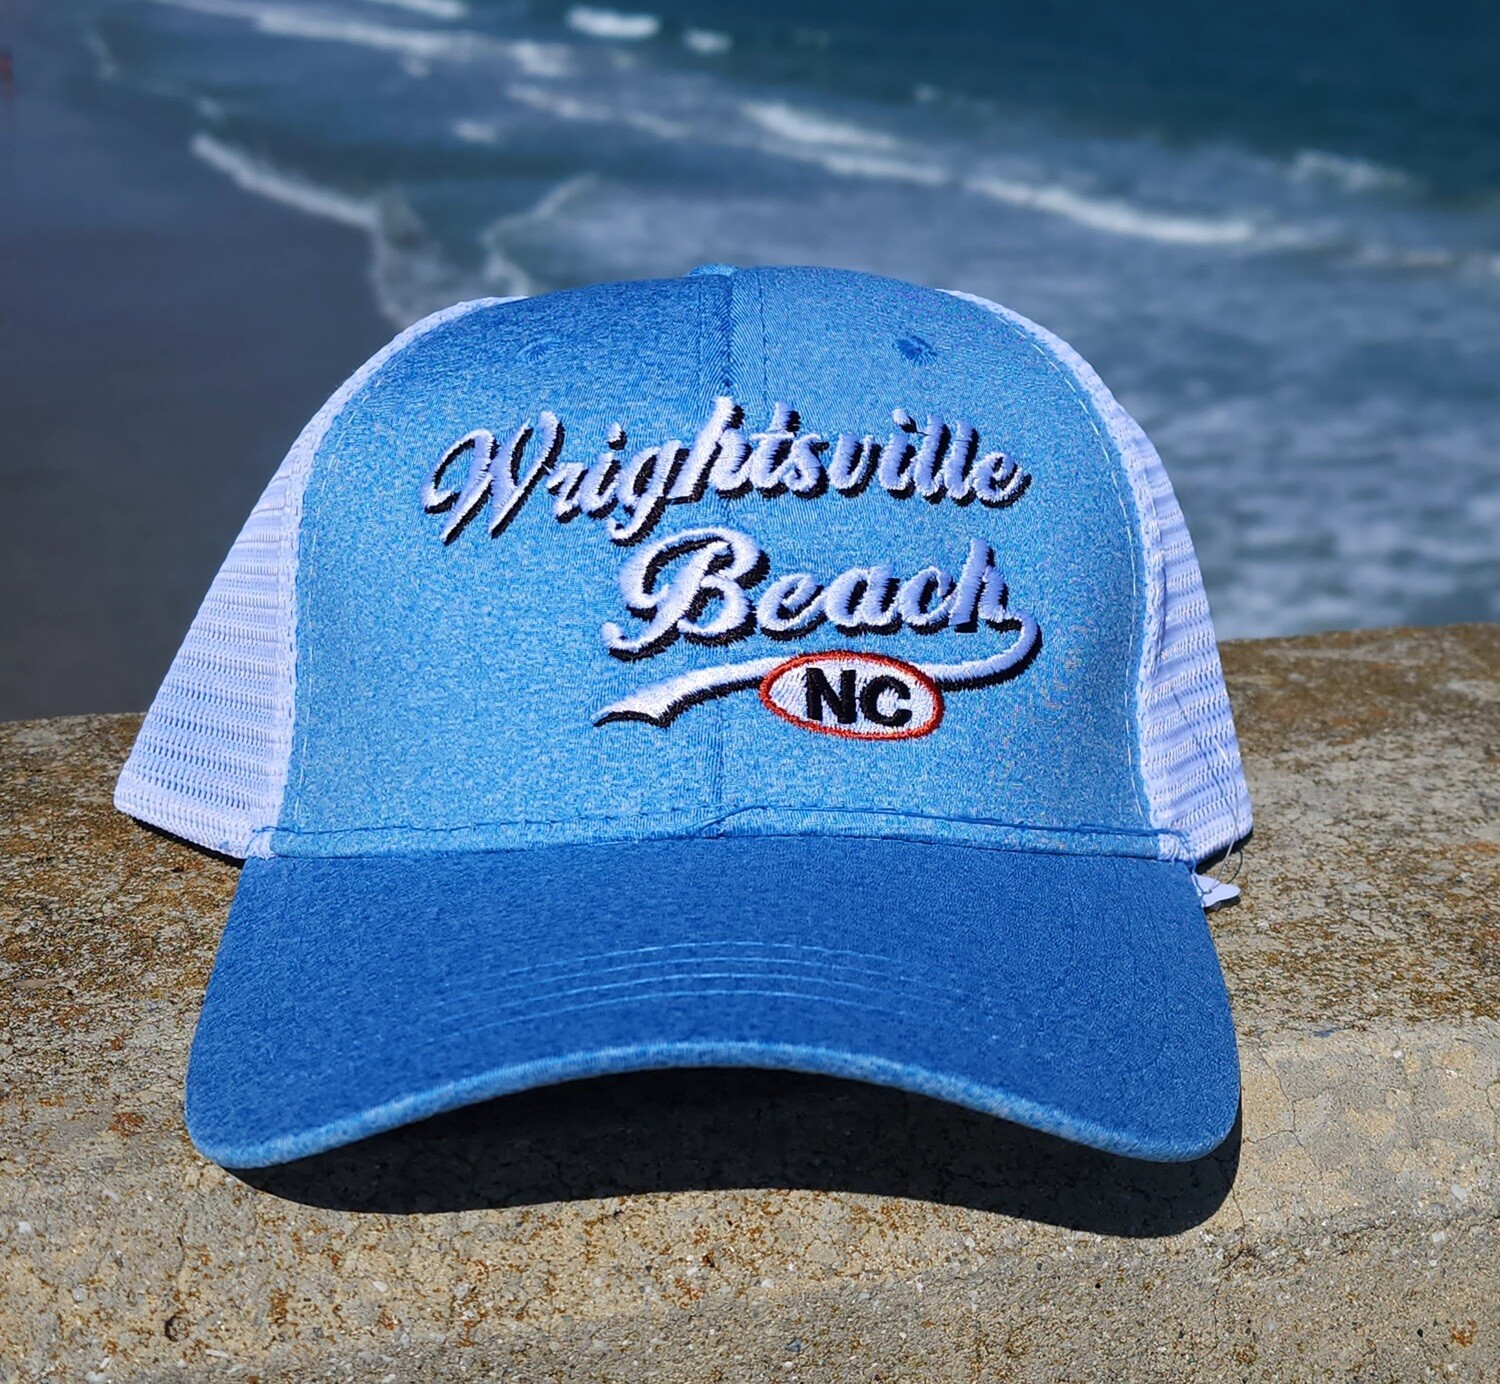 Wrightsville Beach, NC Hats